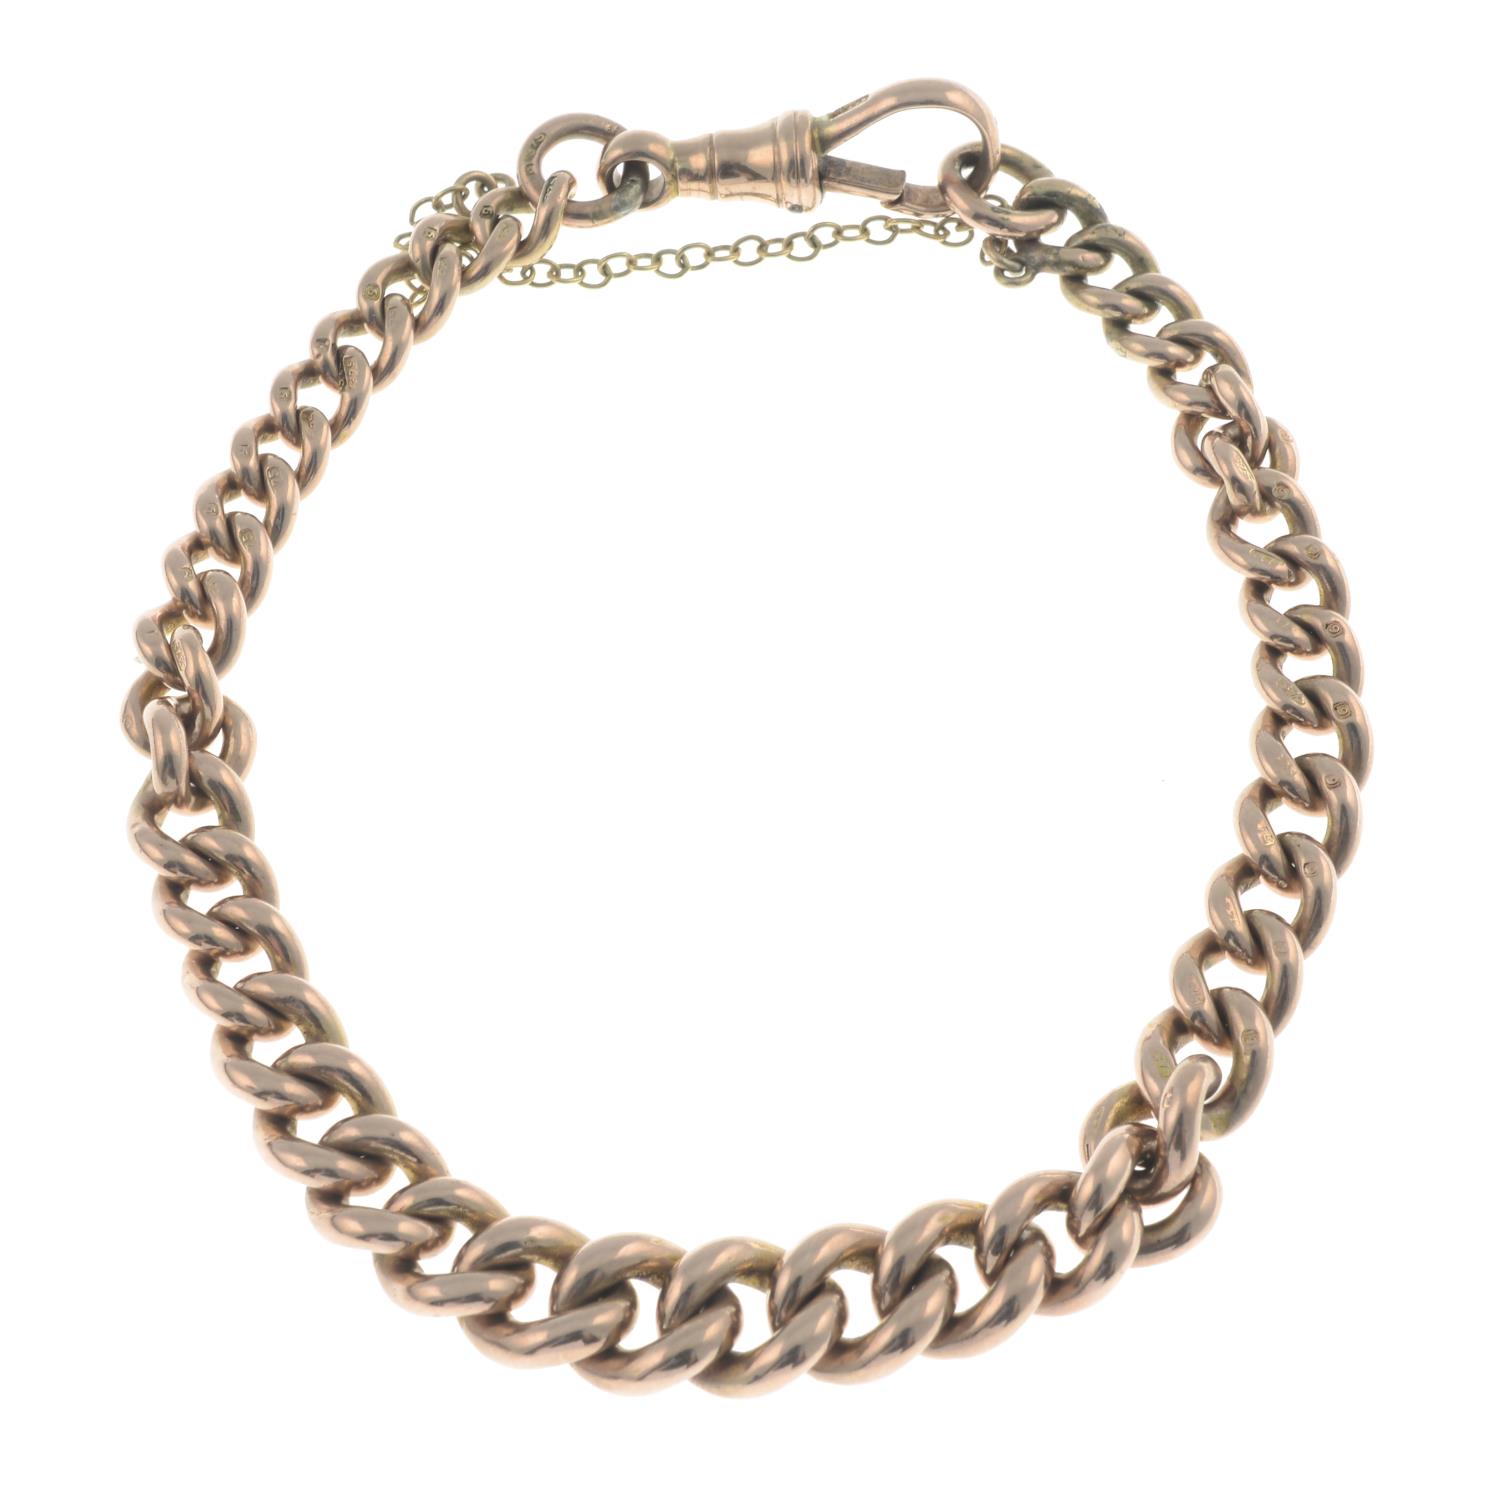 A 9ct gold curb-link bracelet.Hallmarks for 9ct gold. - Image 2 of 2